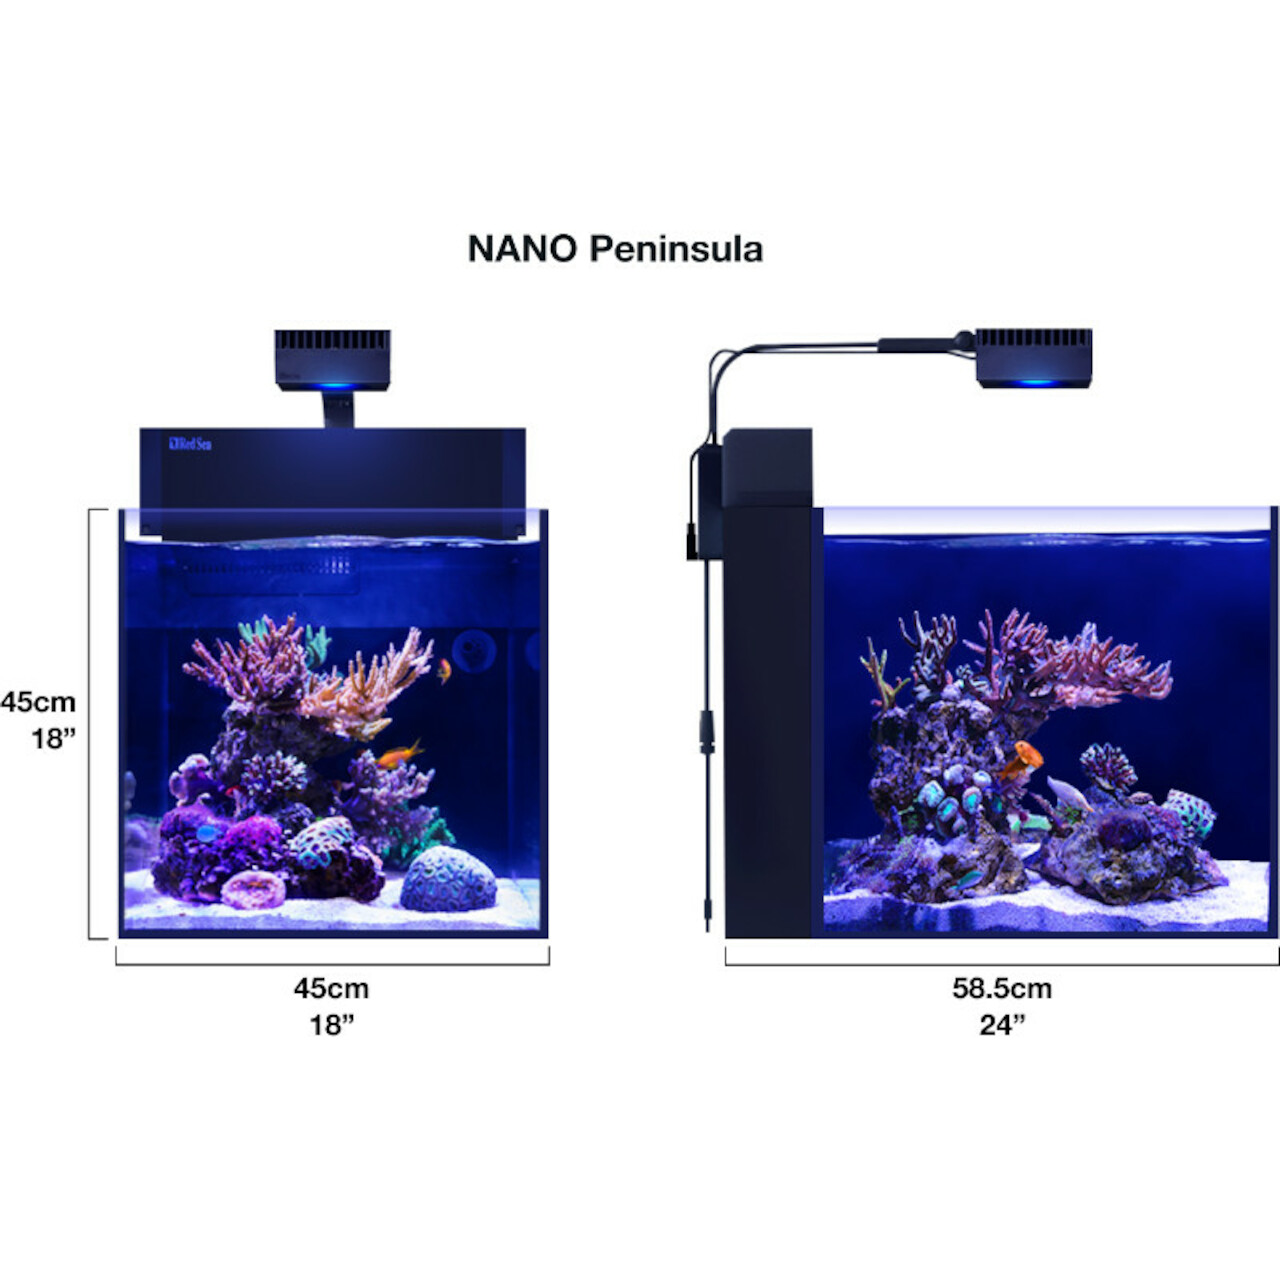 Red Sea Max Nano Peninsula G2 weiss